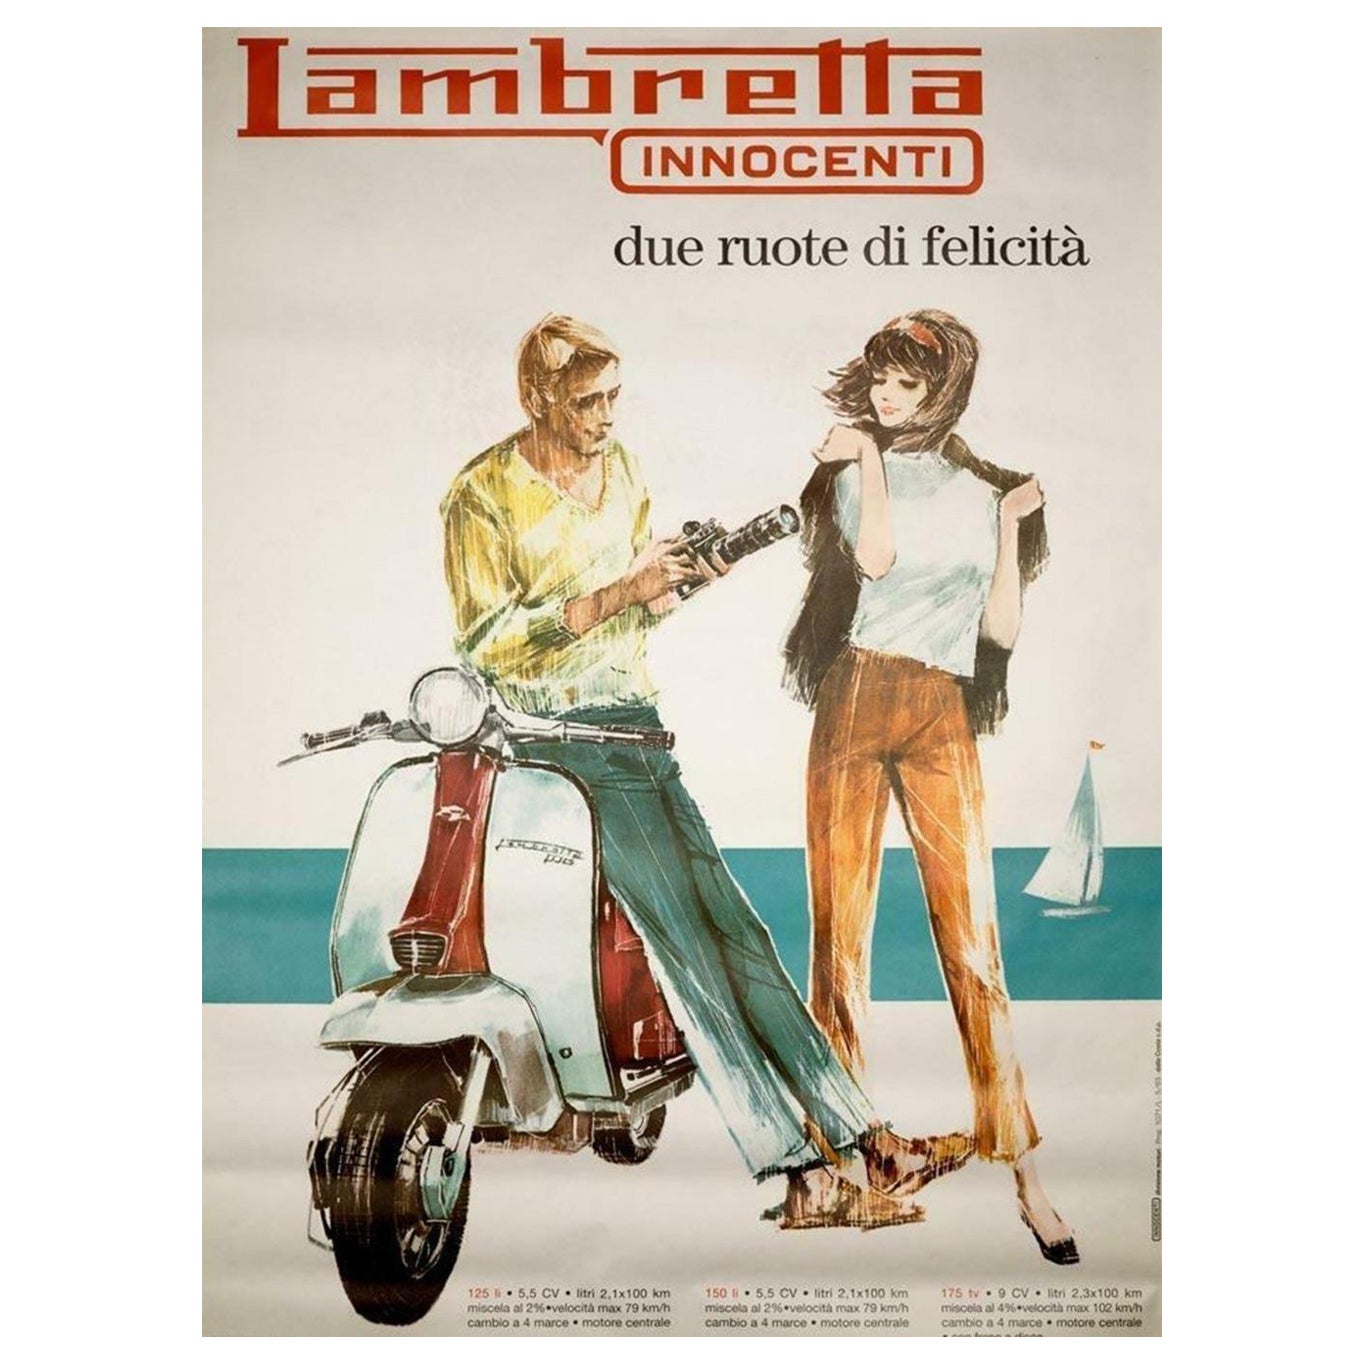 Affiche vintage d'origine d'Armretta Innocenti, 1963